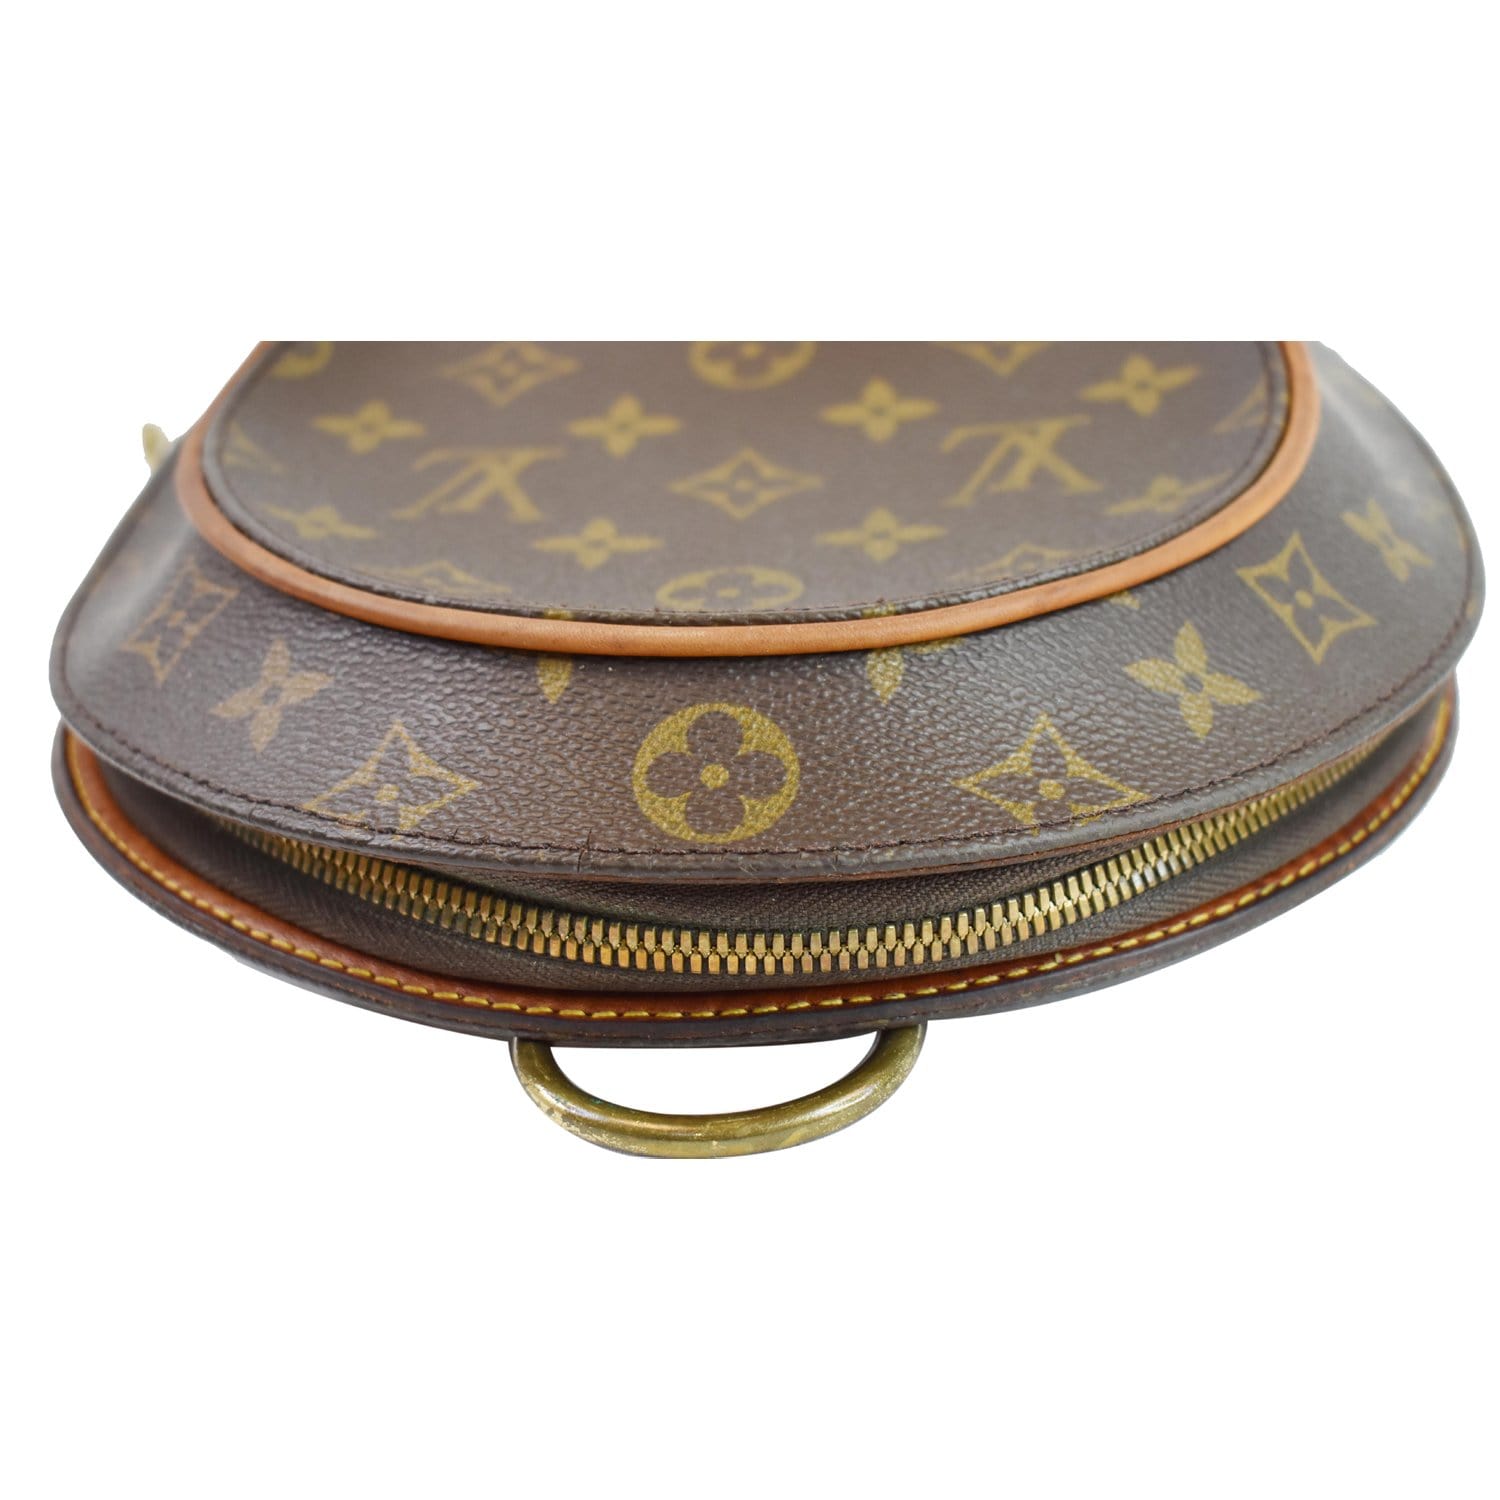 Louis Vuitton cylinder shaped monogrammed bag